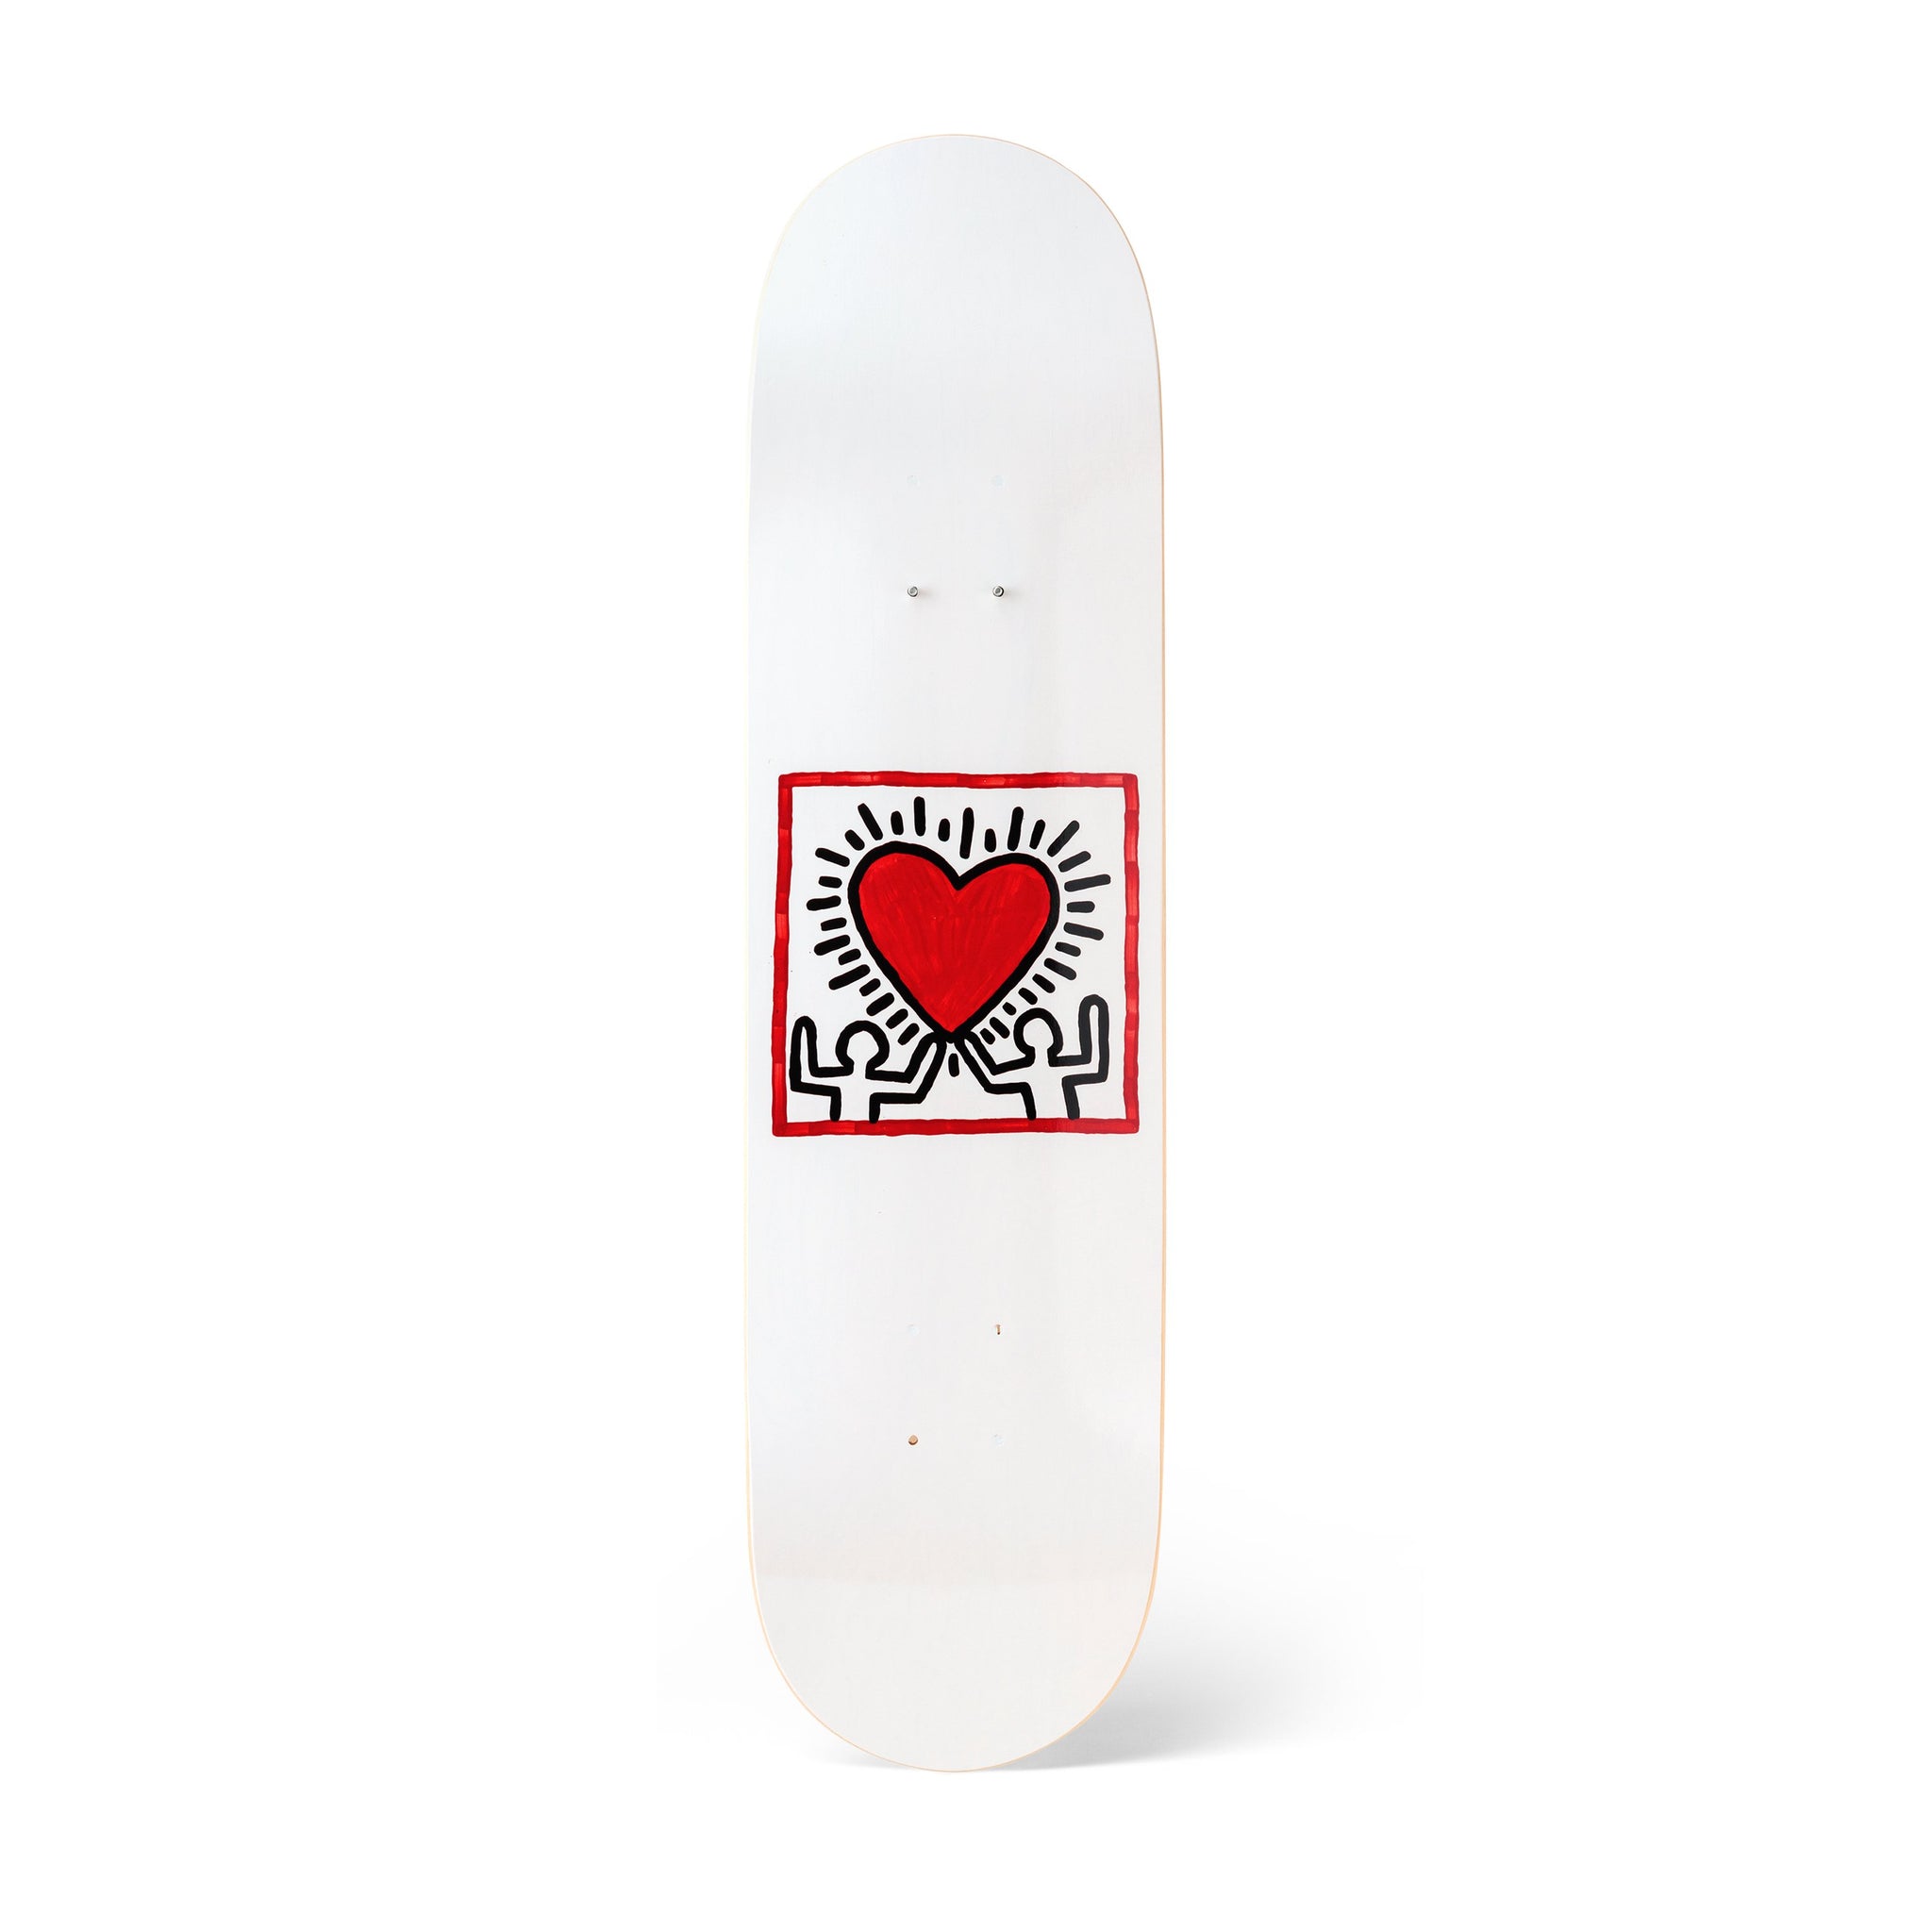 Keith Haring: Untitled (Heart) Skateboard Deck